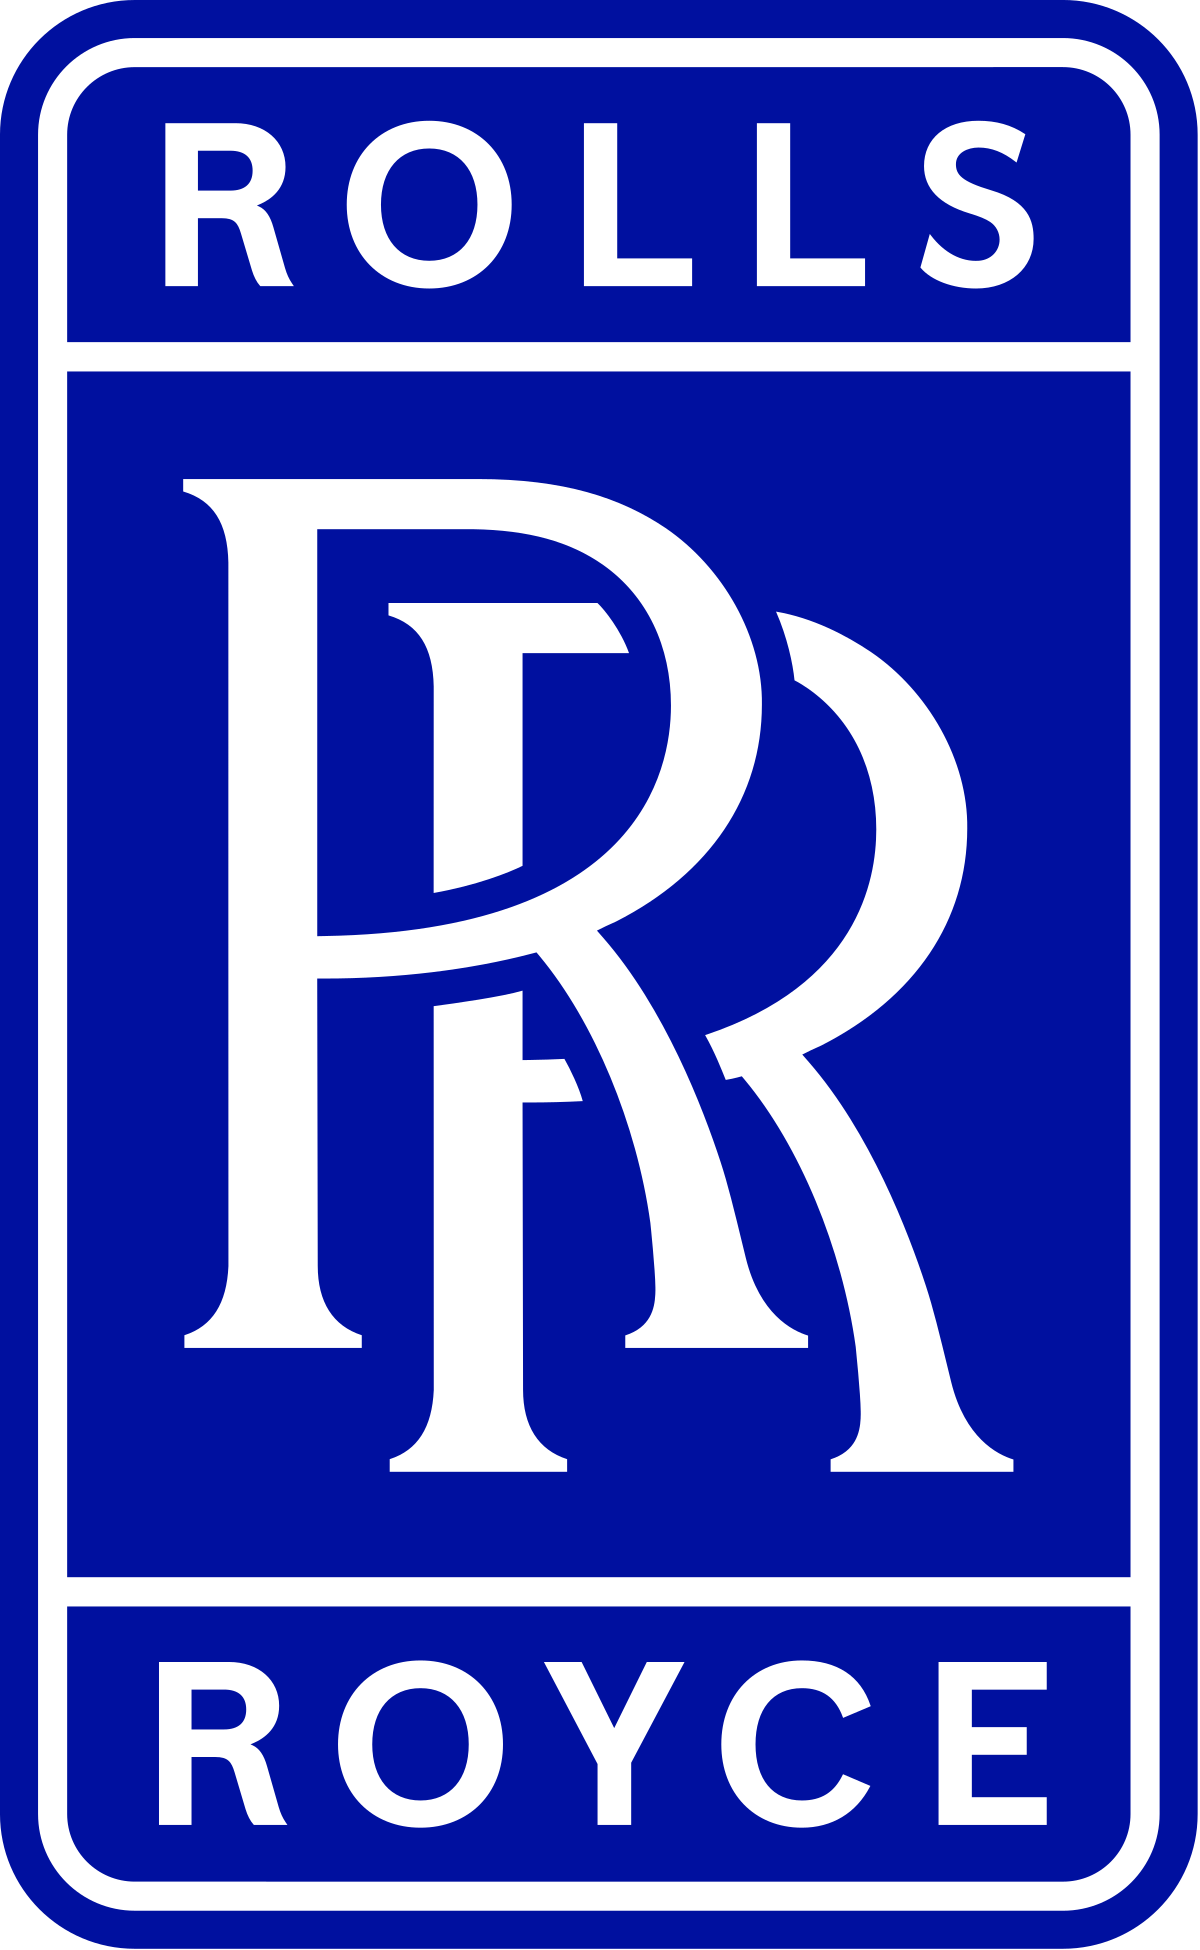 Rolls-Royce (Aerospace & Defence) Brand Logo